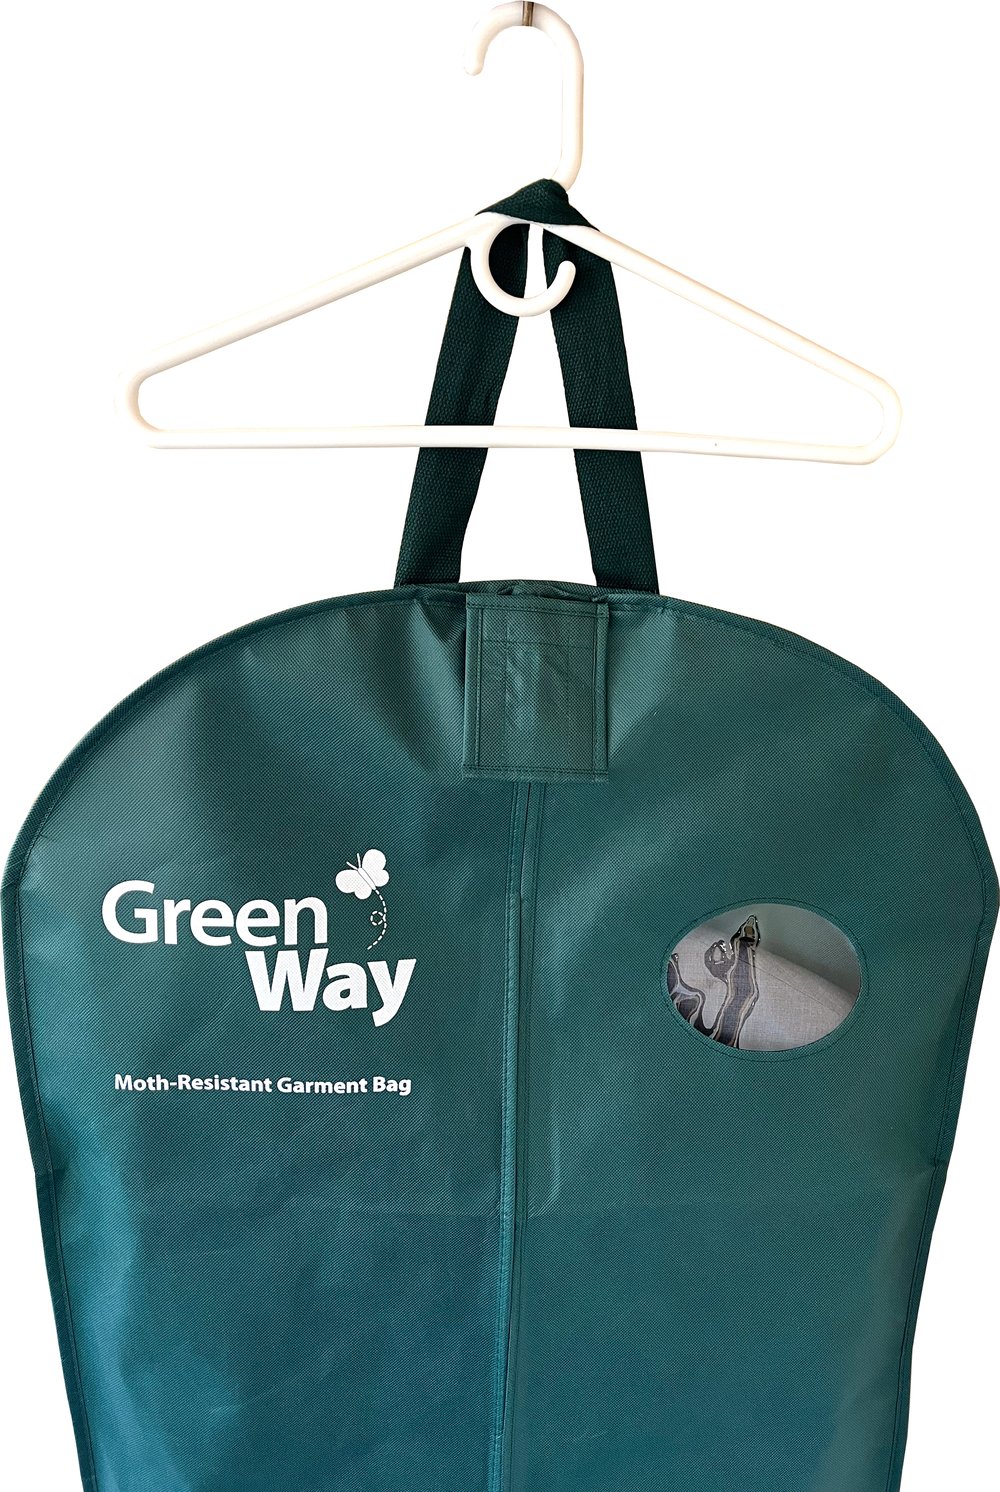 GreenWay Moth Resistant Garment Bags — GreenWay